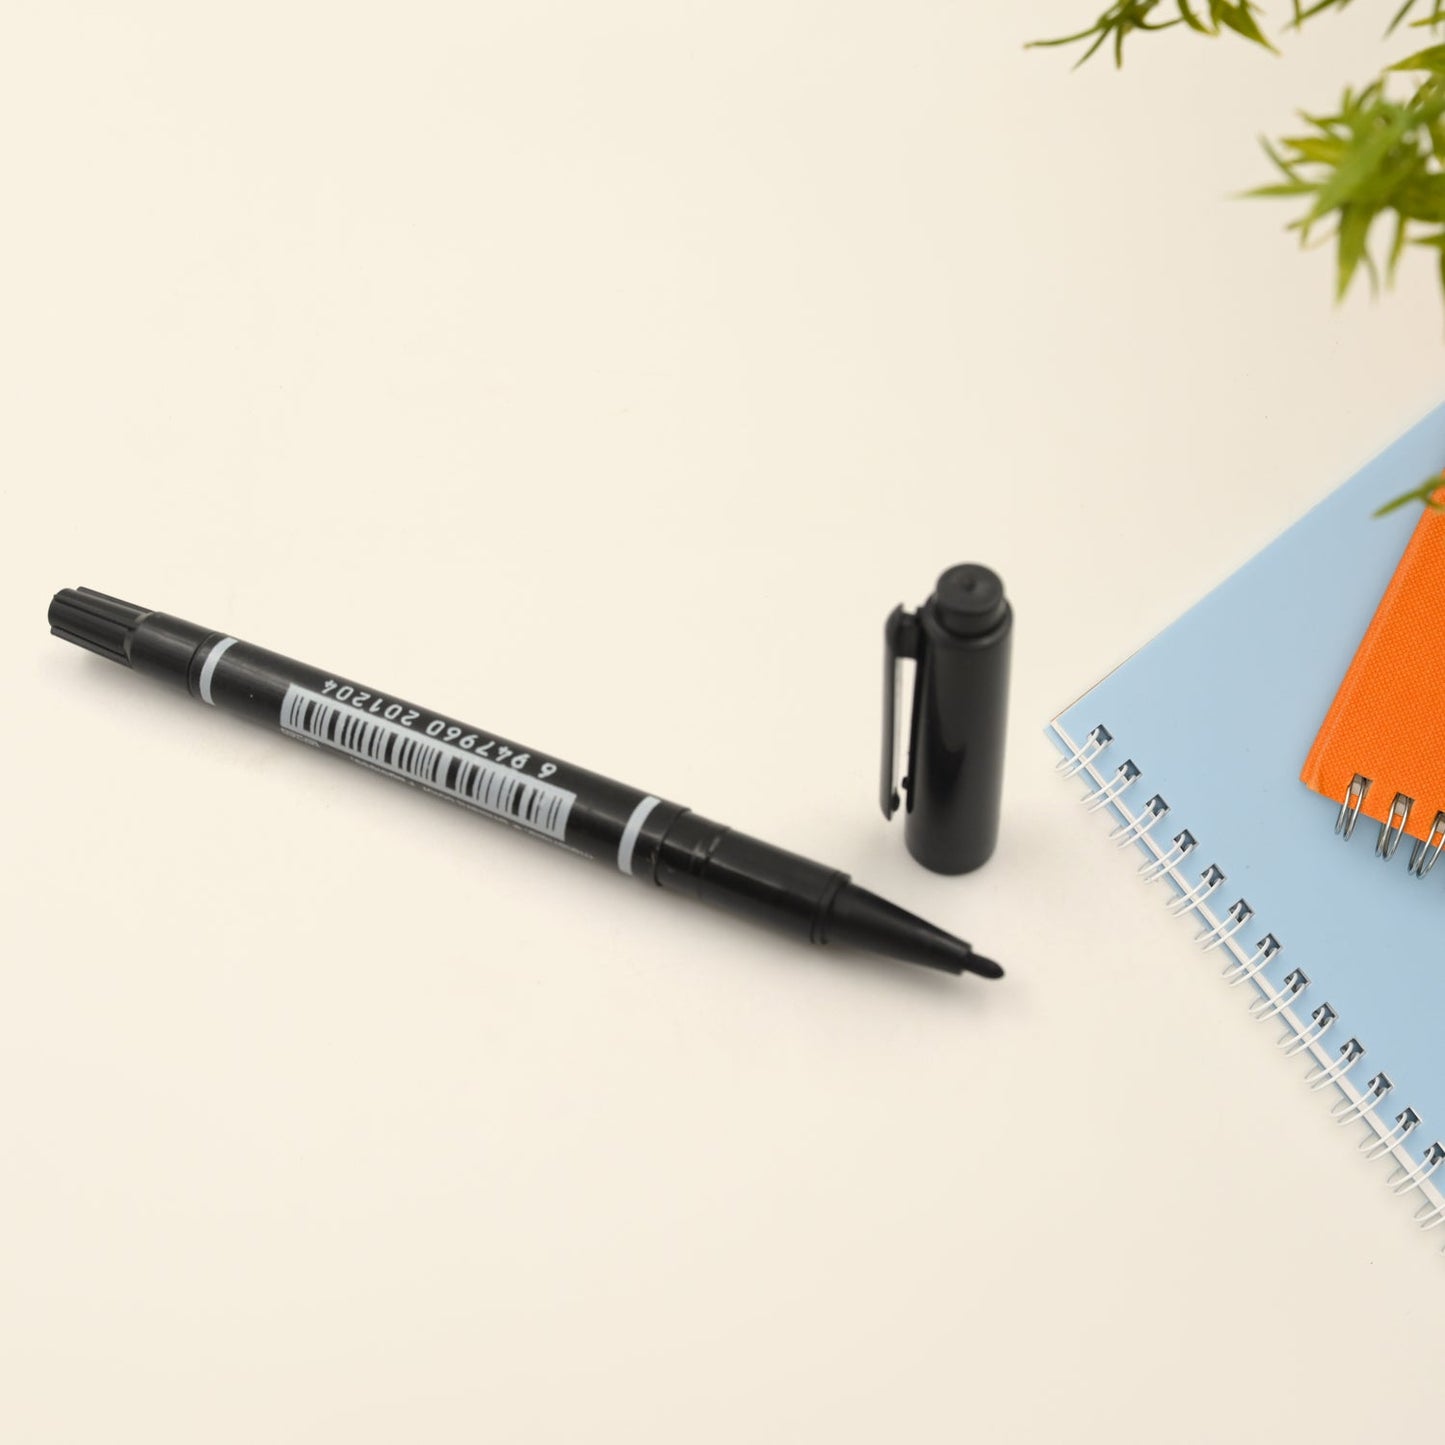 7941 2Sided pen & Marker Office Products School, Office Supplies Stationery Marker Pen, Double Marker Black Ink Waterproof Marking Pen for Students (1 Pc)